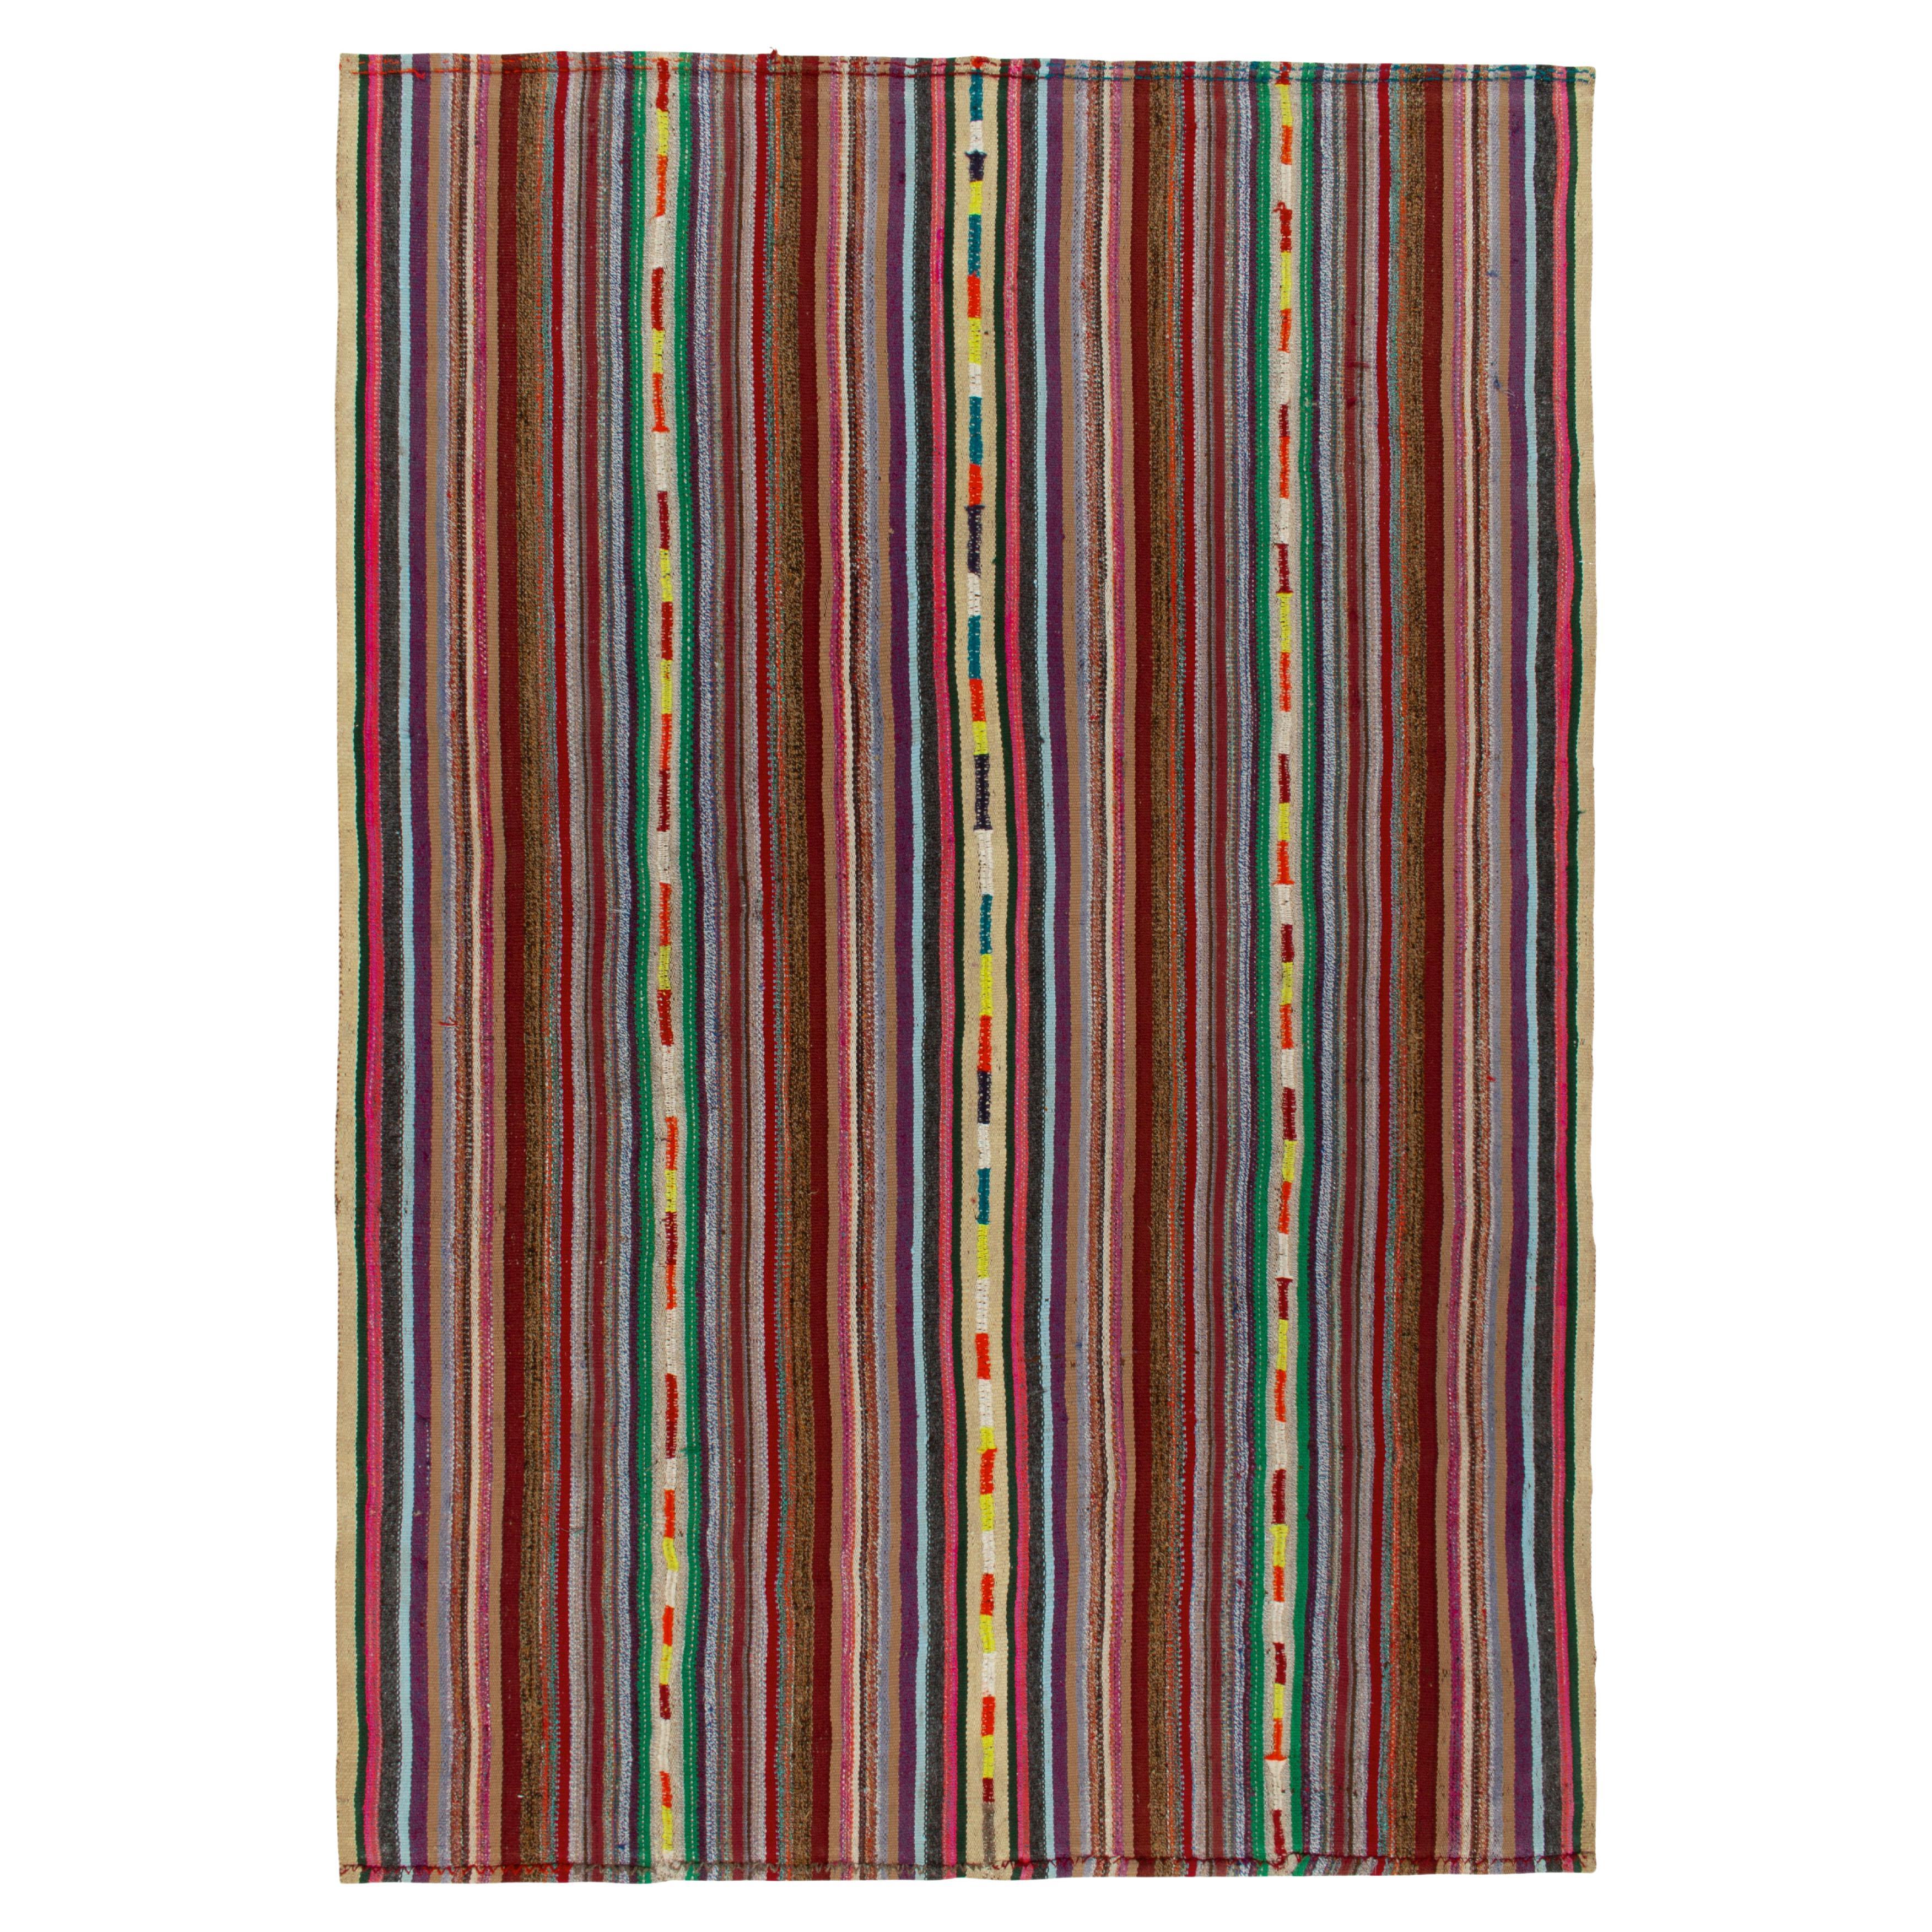 1950s Vintage Chaput Kilim in Multicolor Stripe Patterns by Rug & Kilim For Sale